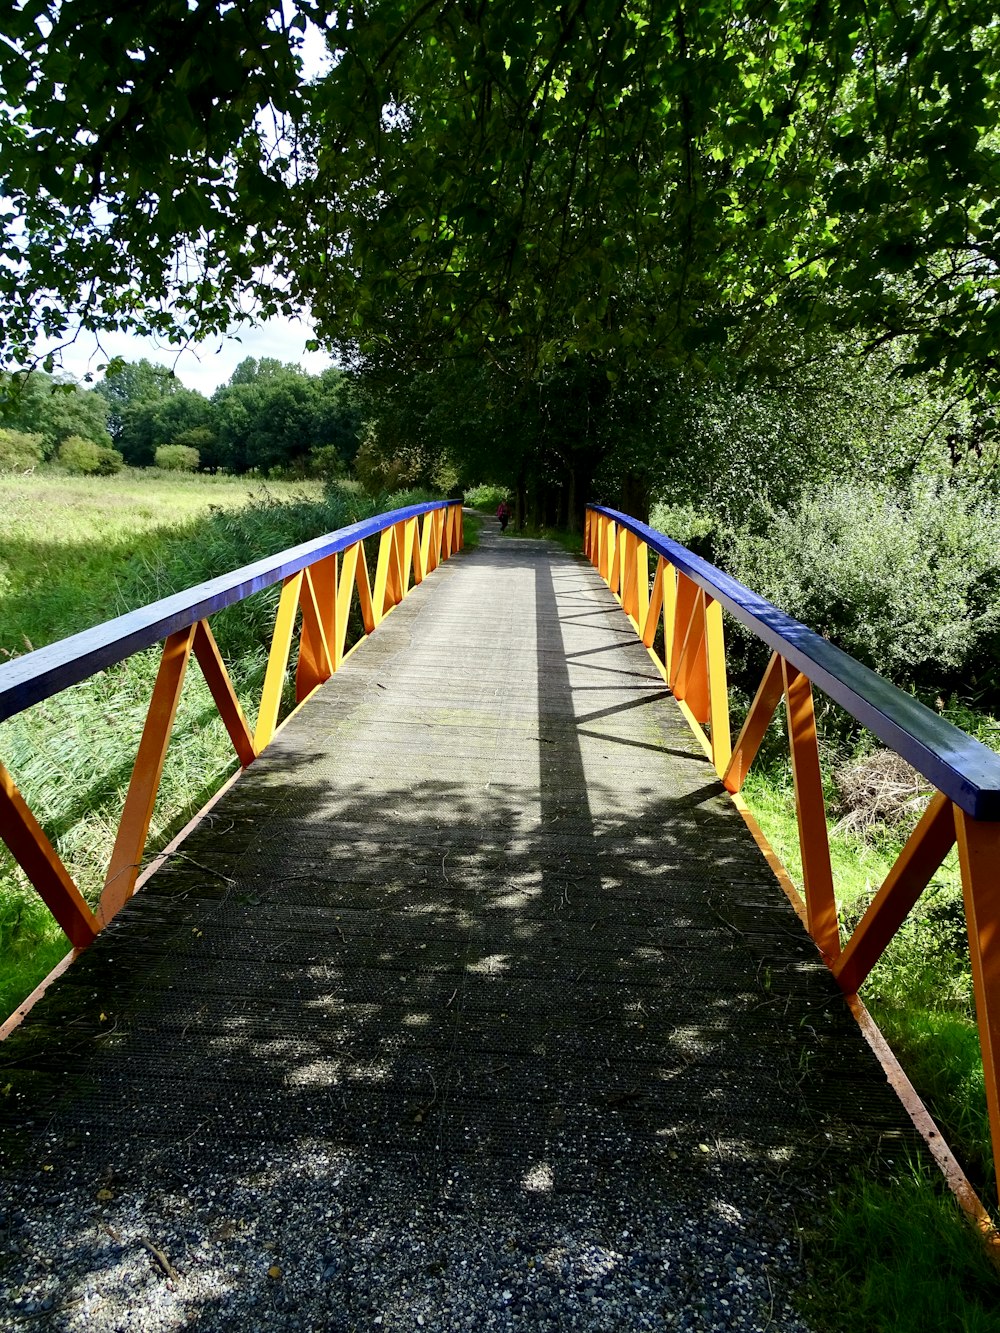 brown wooden bridge in between green trees during daytime